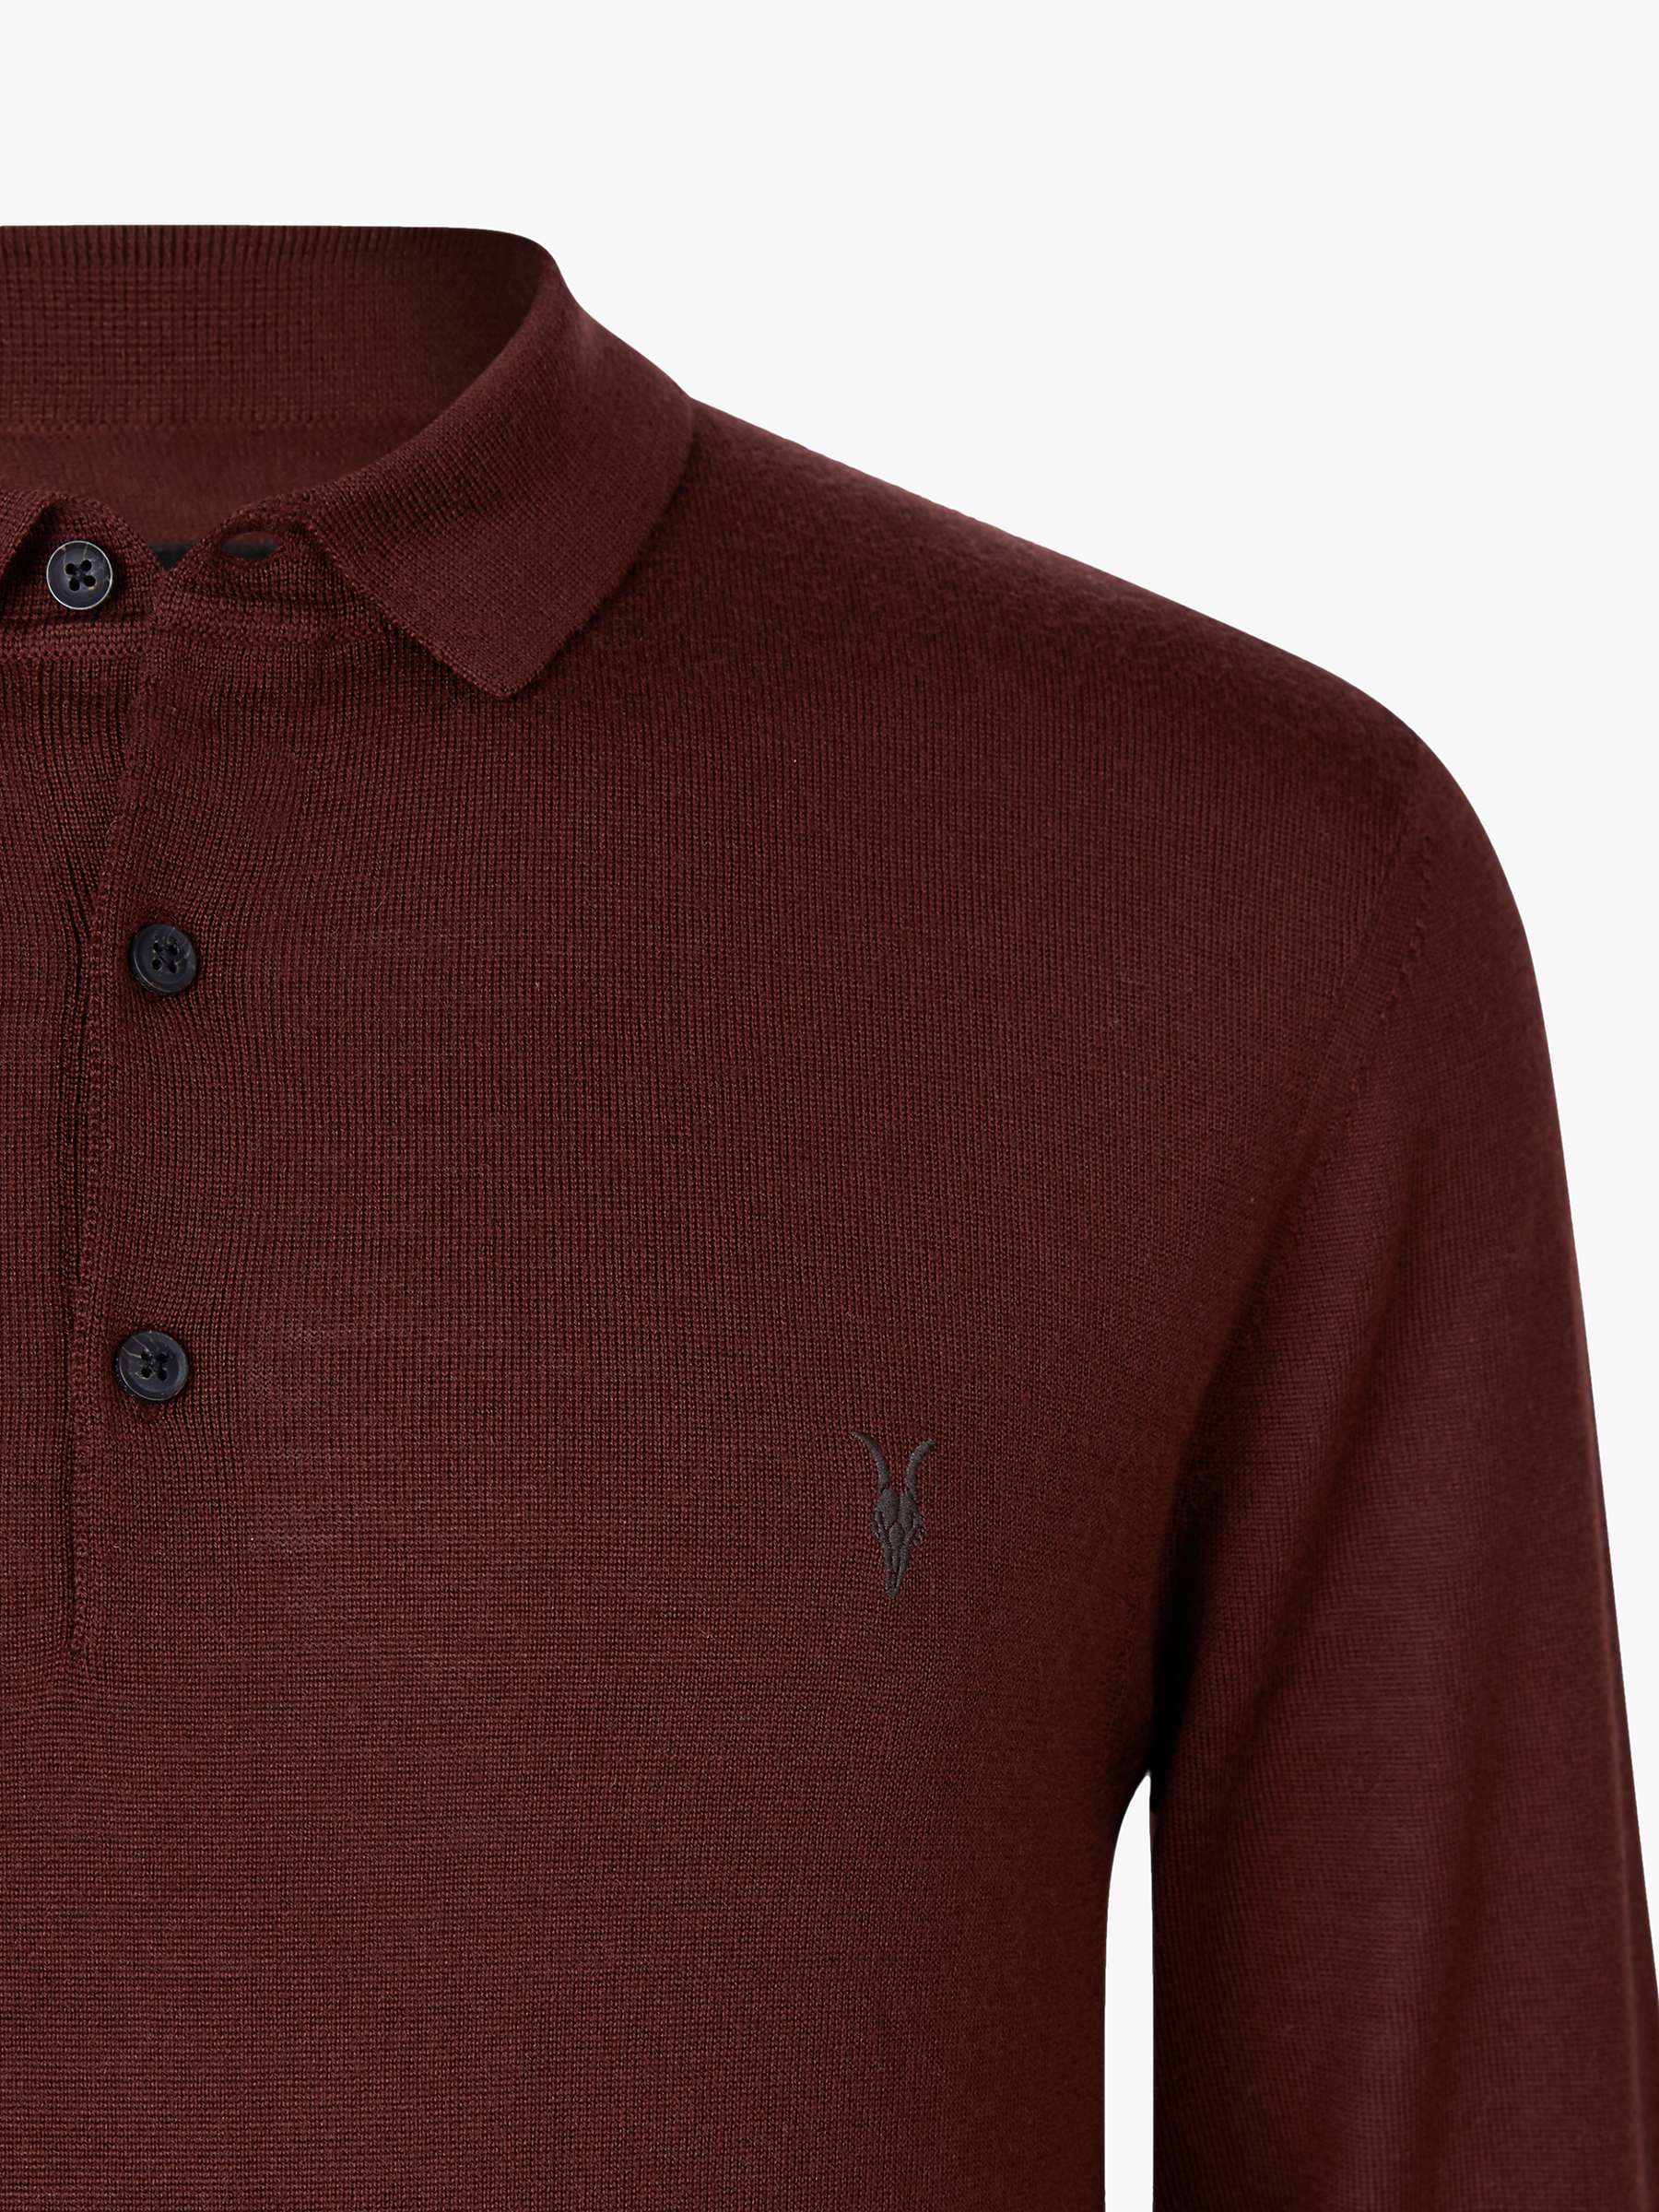 Buy AllSaints Mode Merino Slim Fit Polo Shirt Online at johnlewis.com